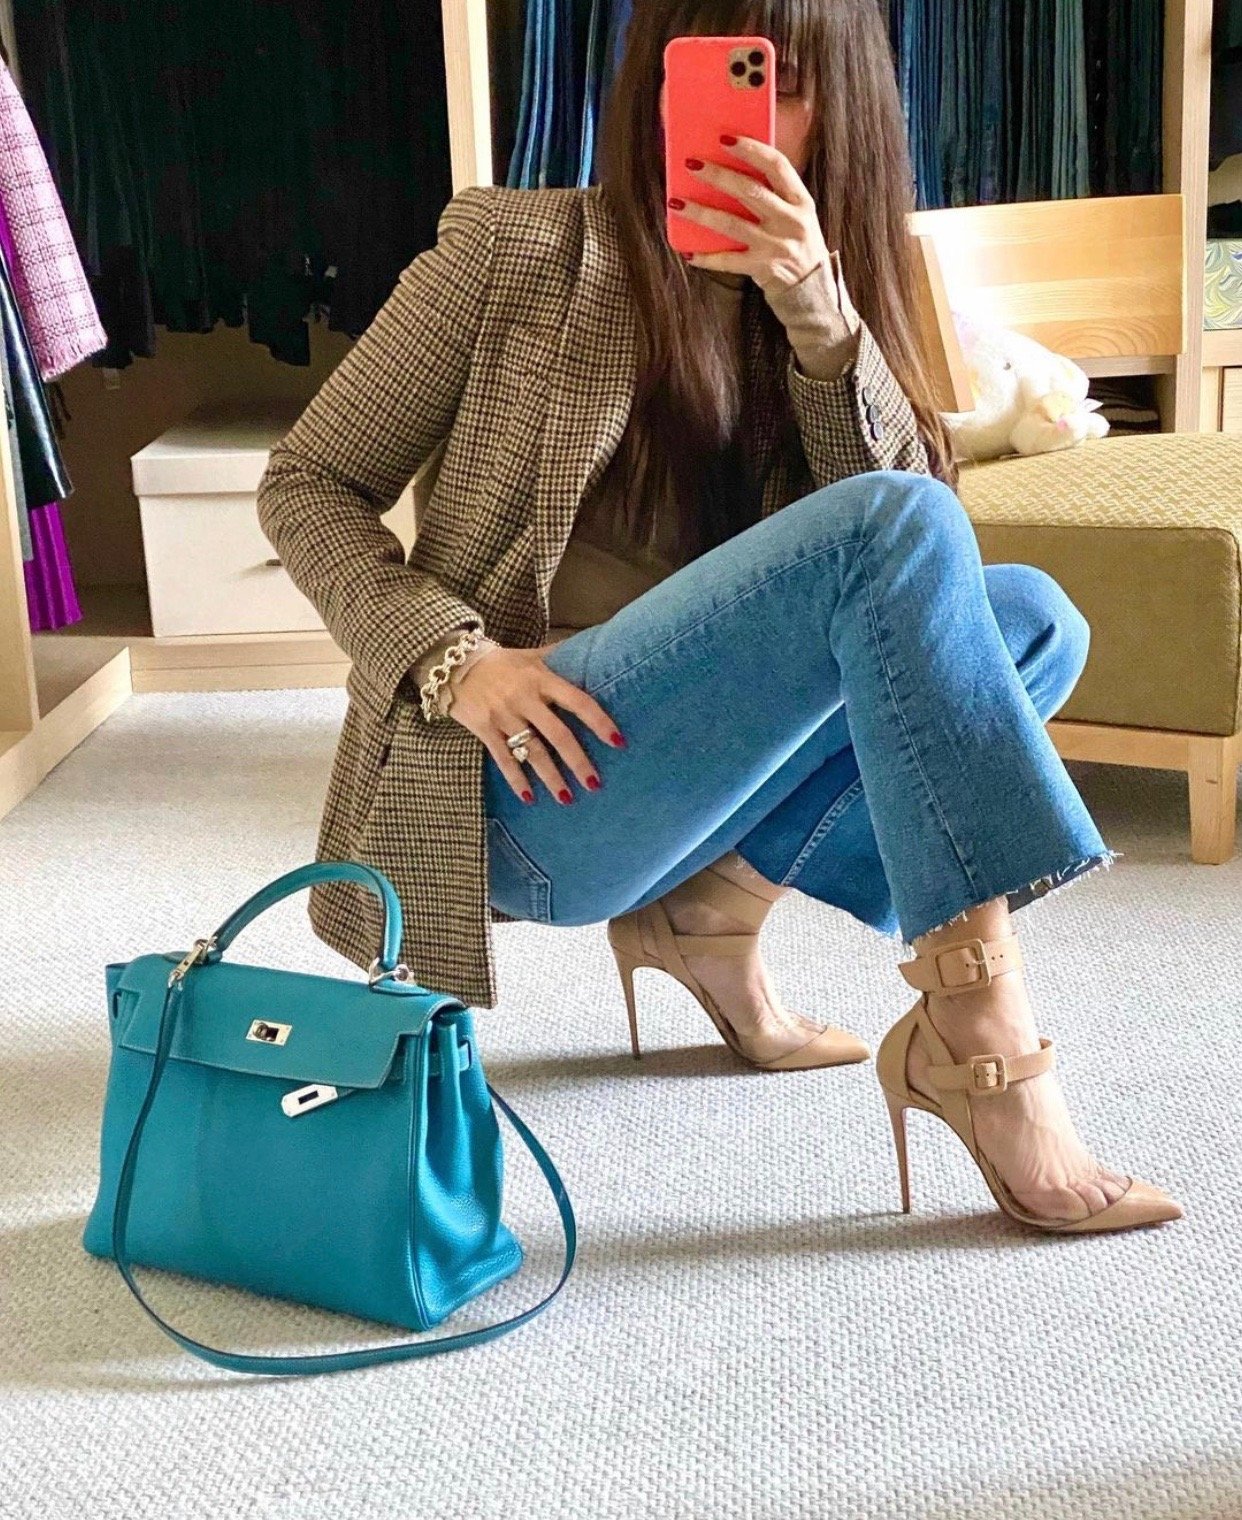 Privé Porter on Instagram: Hermès 25cm Kelly Sellier in Rouge Grenat Epsom  leather! ❤️ Available now! #priveporter #hermes #kelly #kelly25  #kellysellier #unboxing #miami #rougegrenat